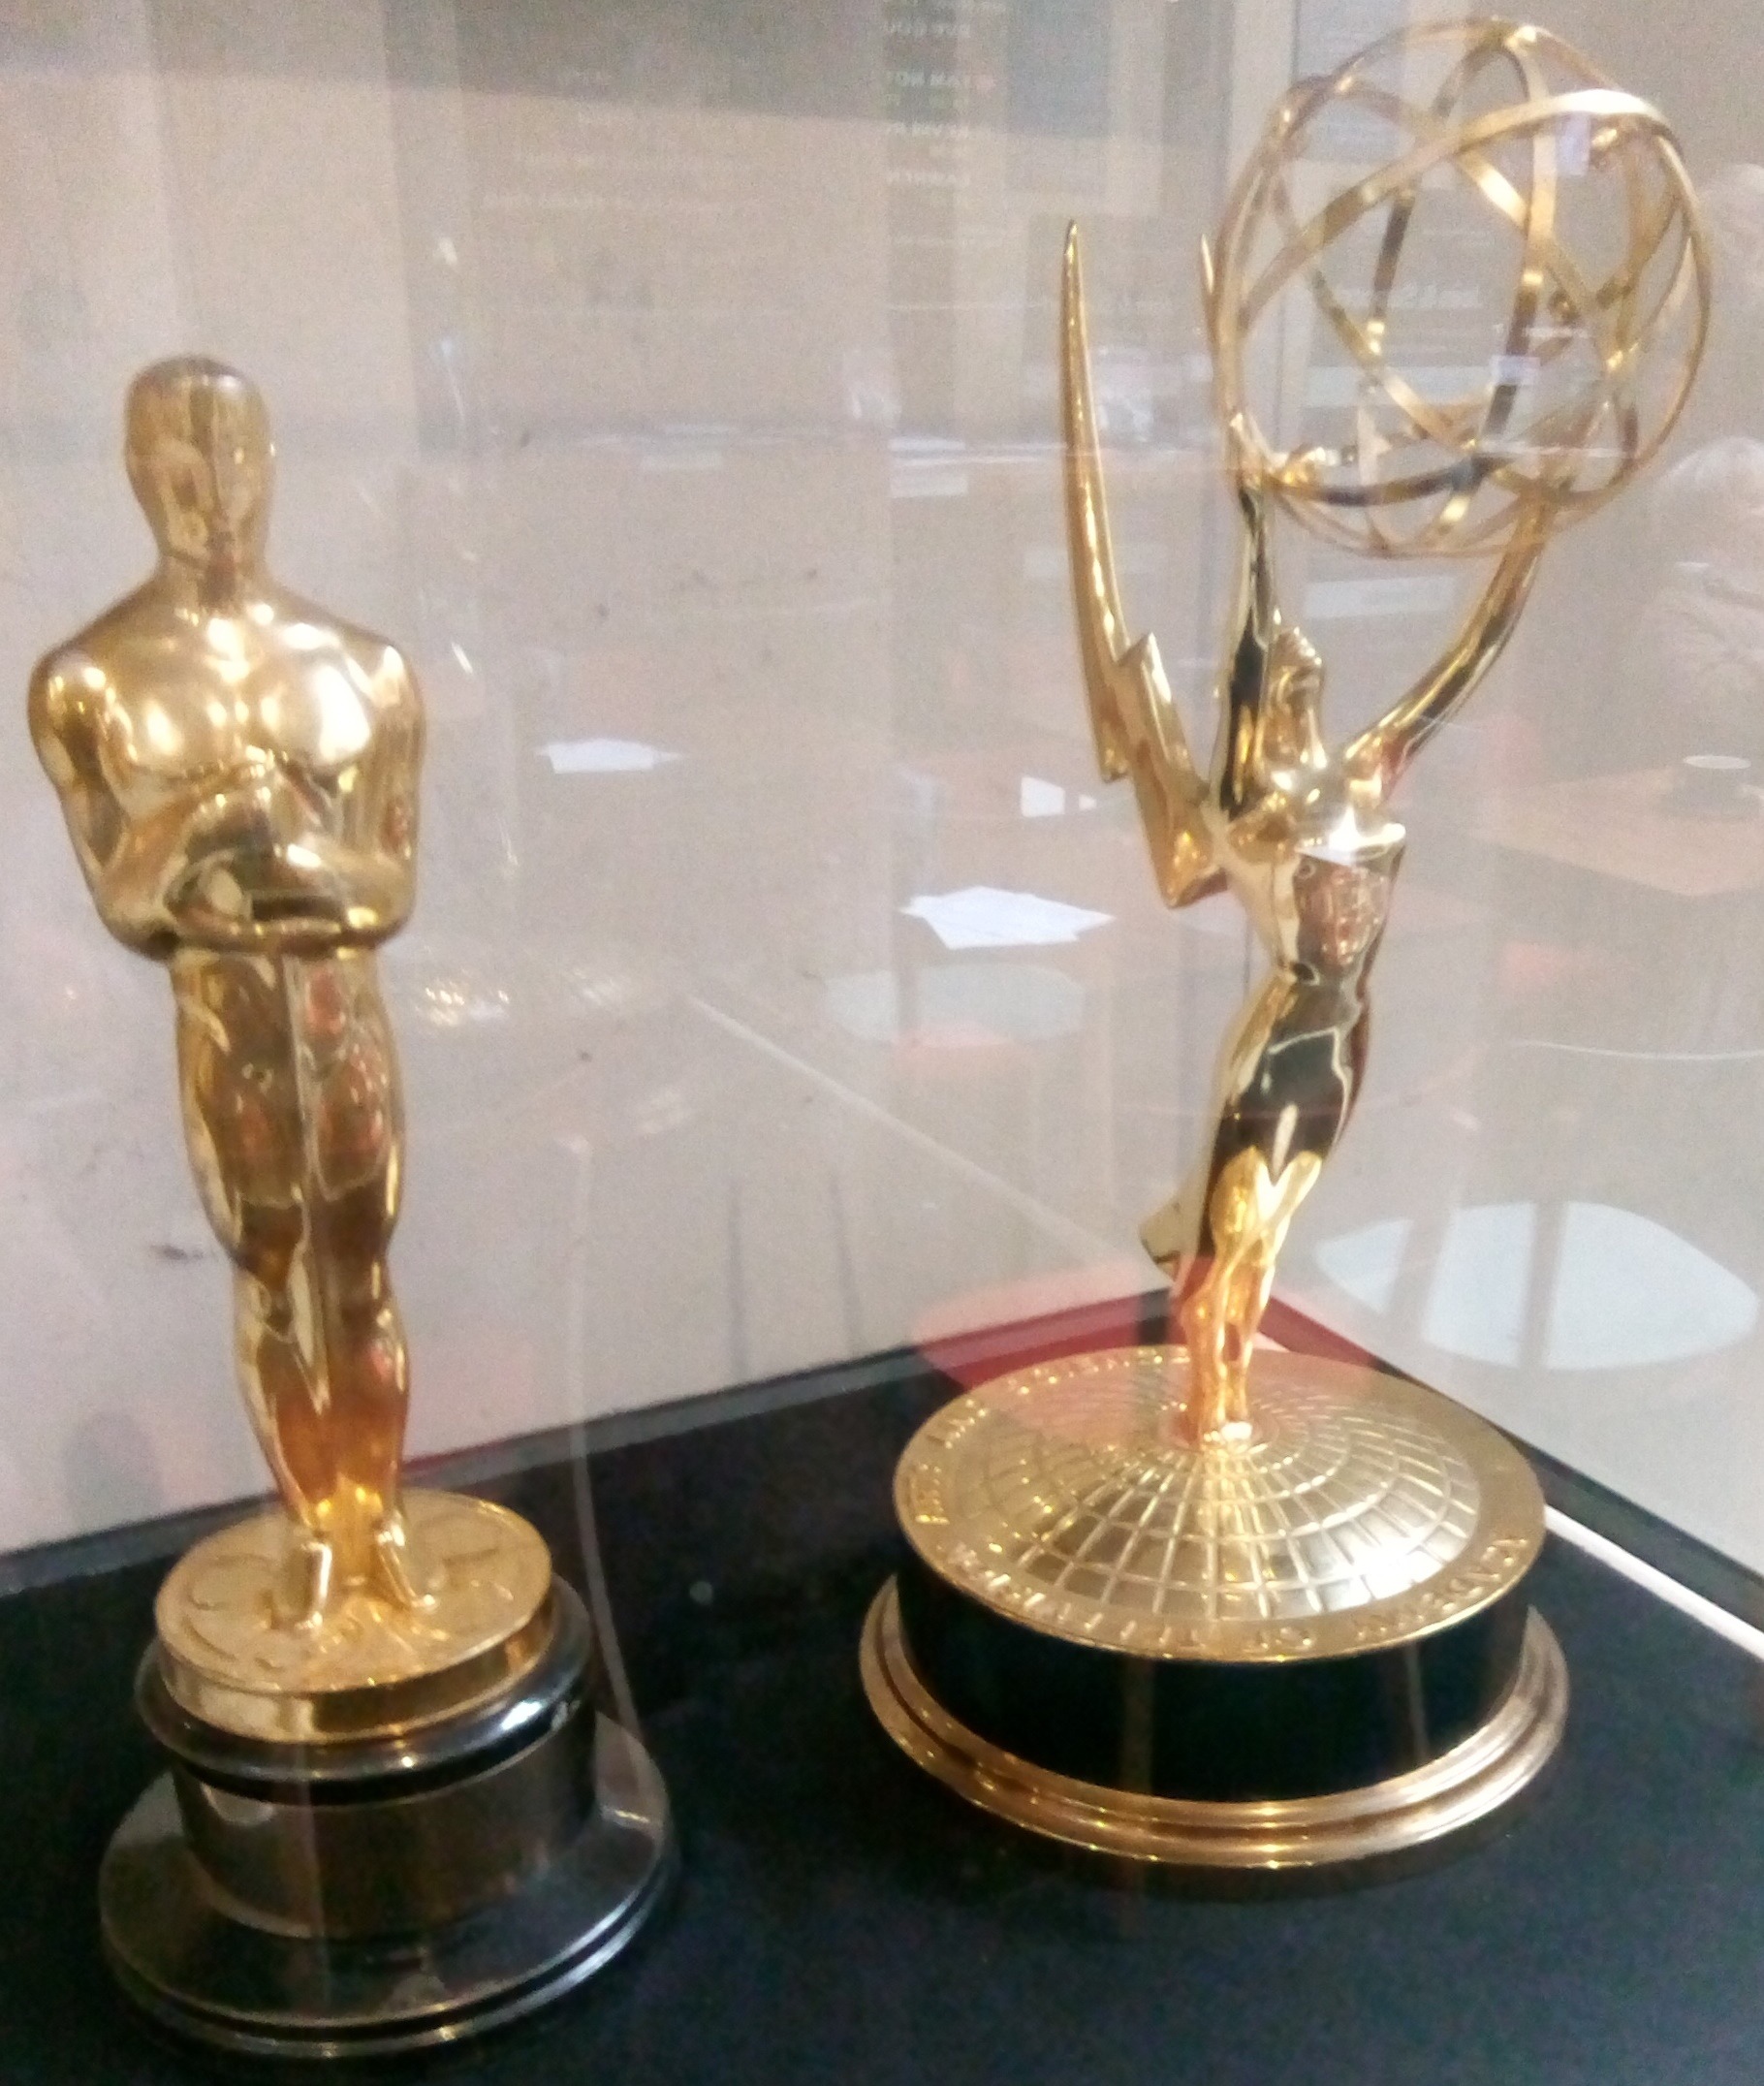 Top Emmy Award winning Actresses